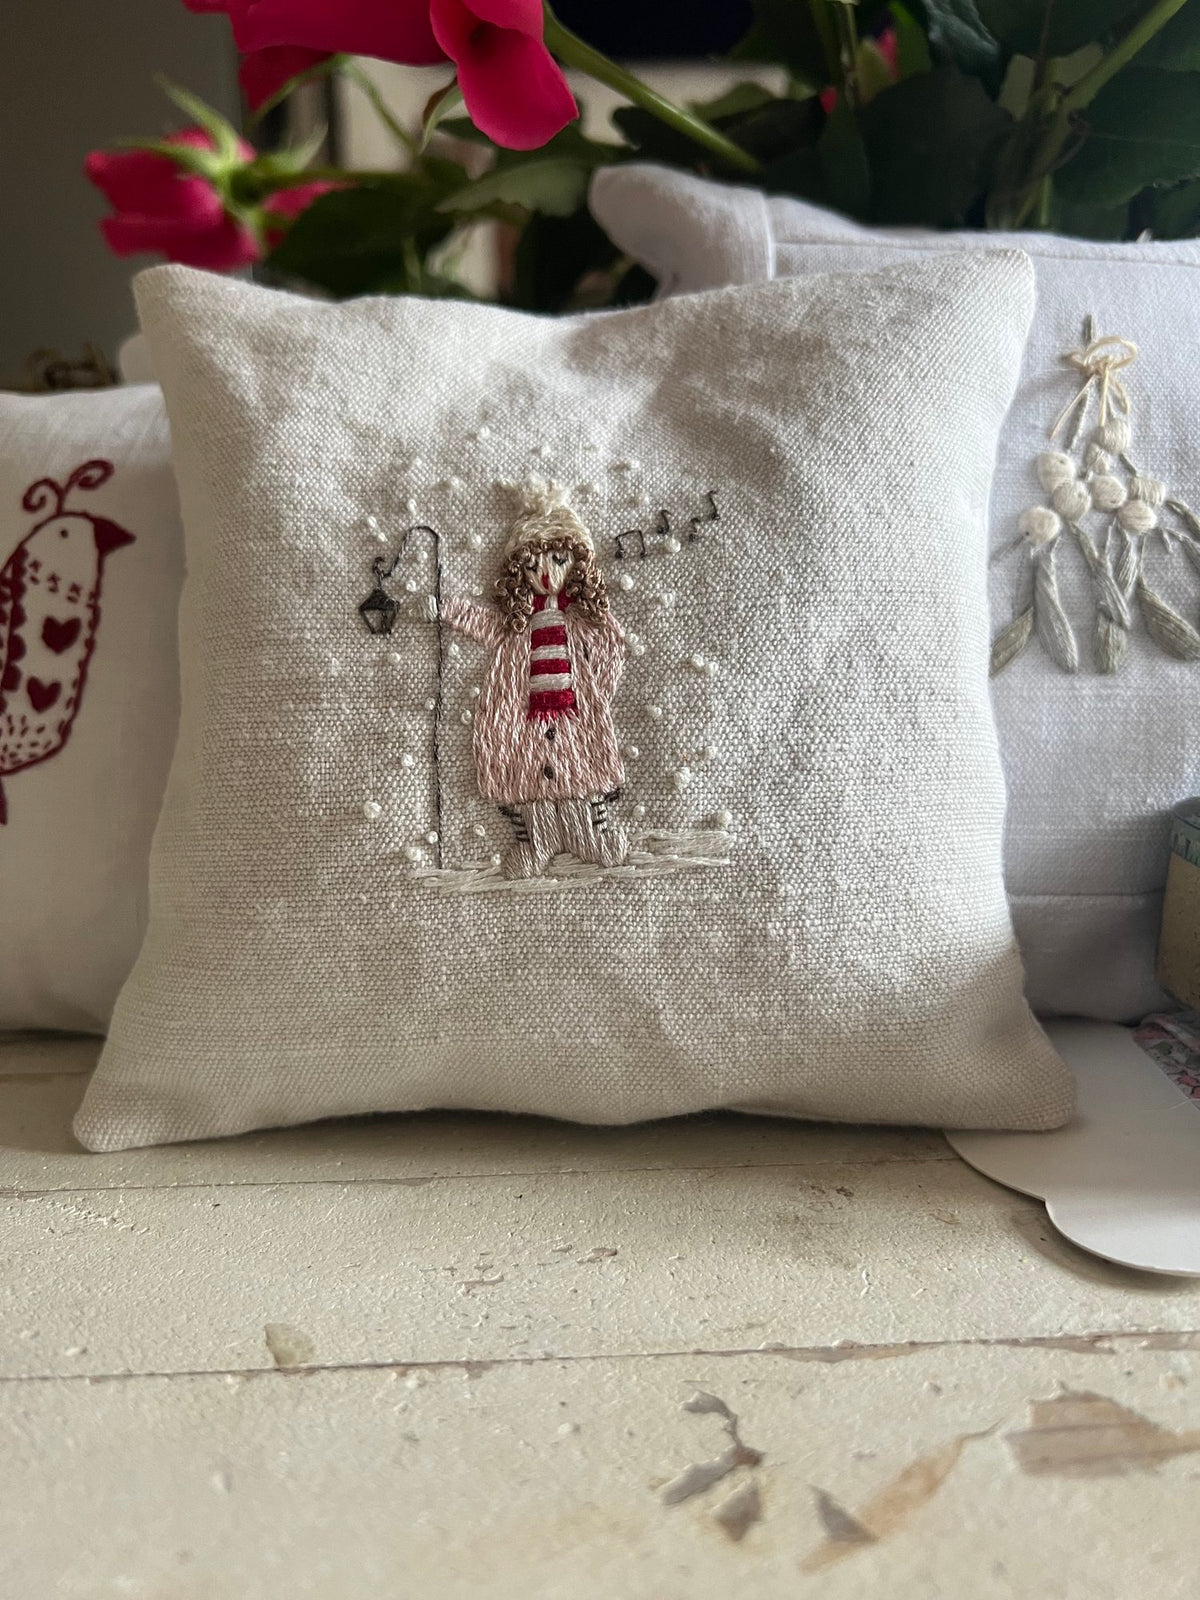 The Stitchery Embroidery Mini Kit: The Carol Singer